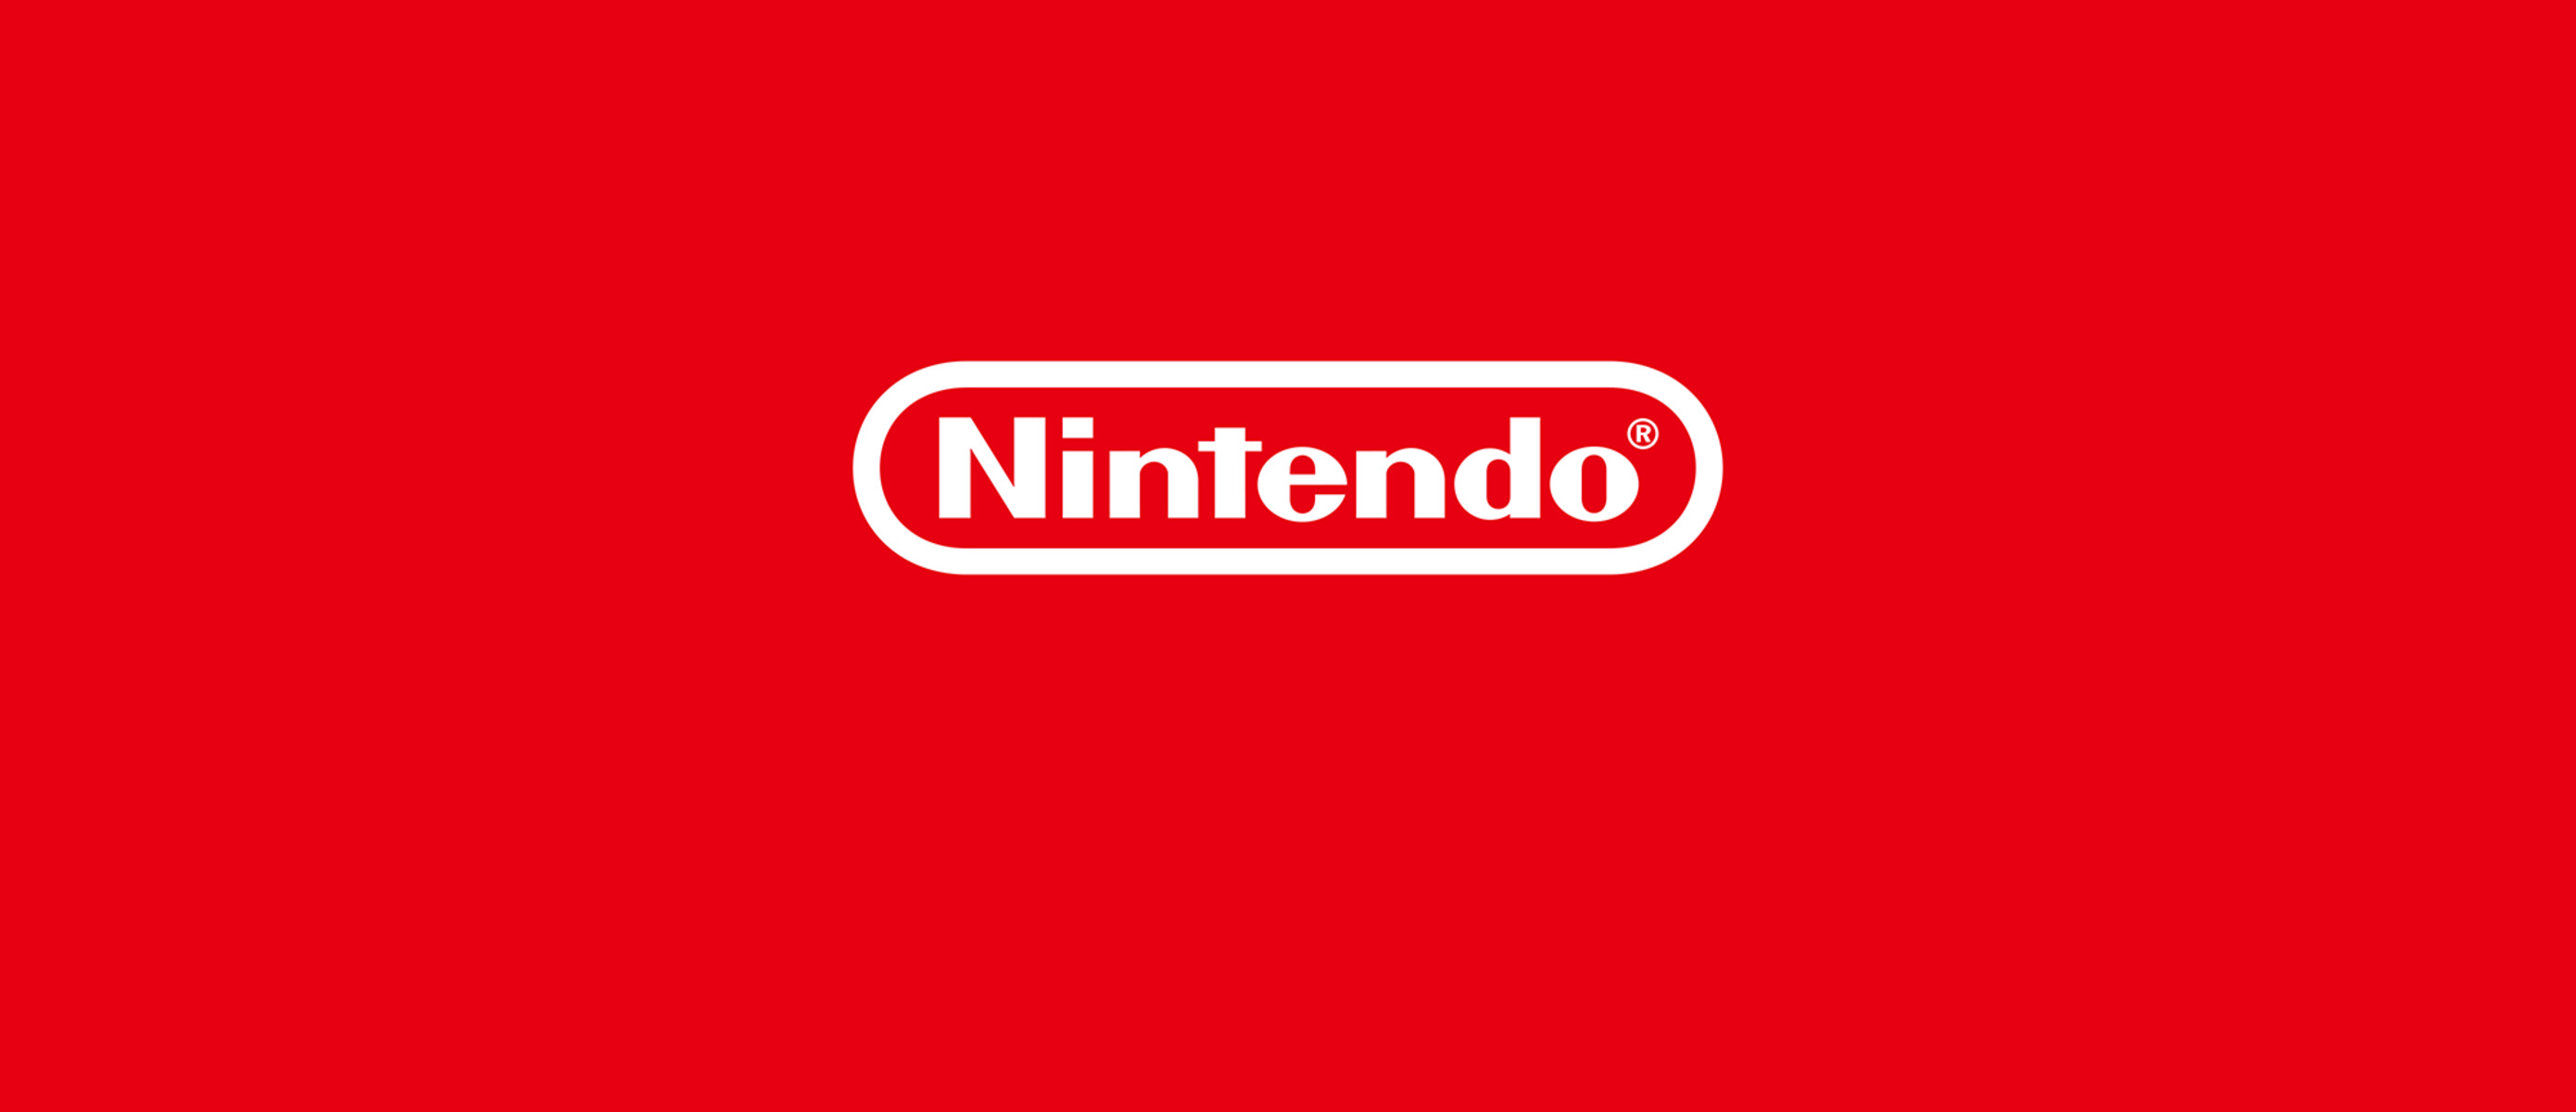 Компания nintendo. Нинтендо. Бренд Nintendo. Nintendo лого. Аккаунт Нинтендо.